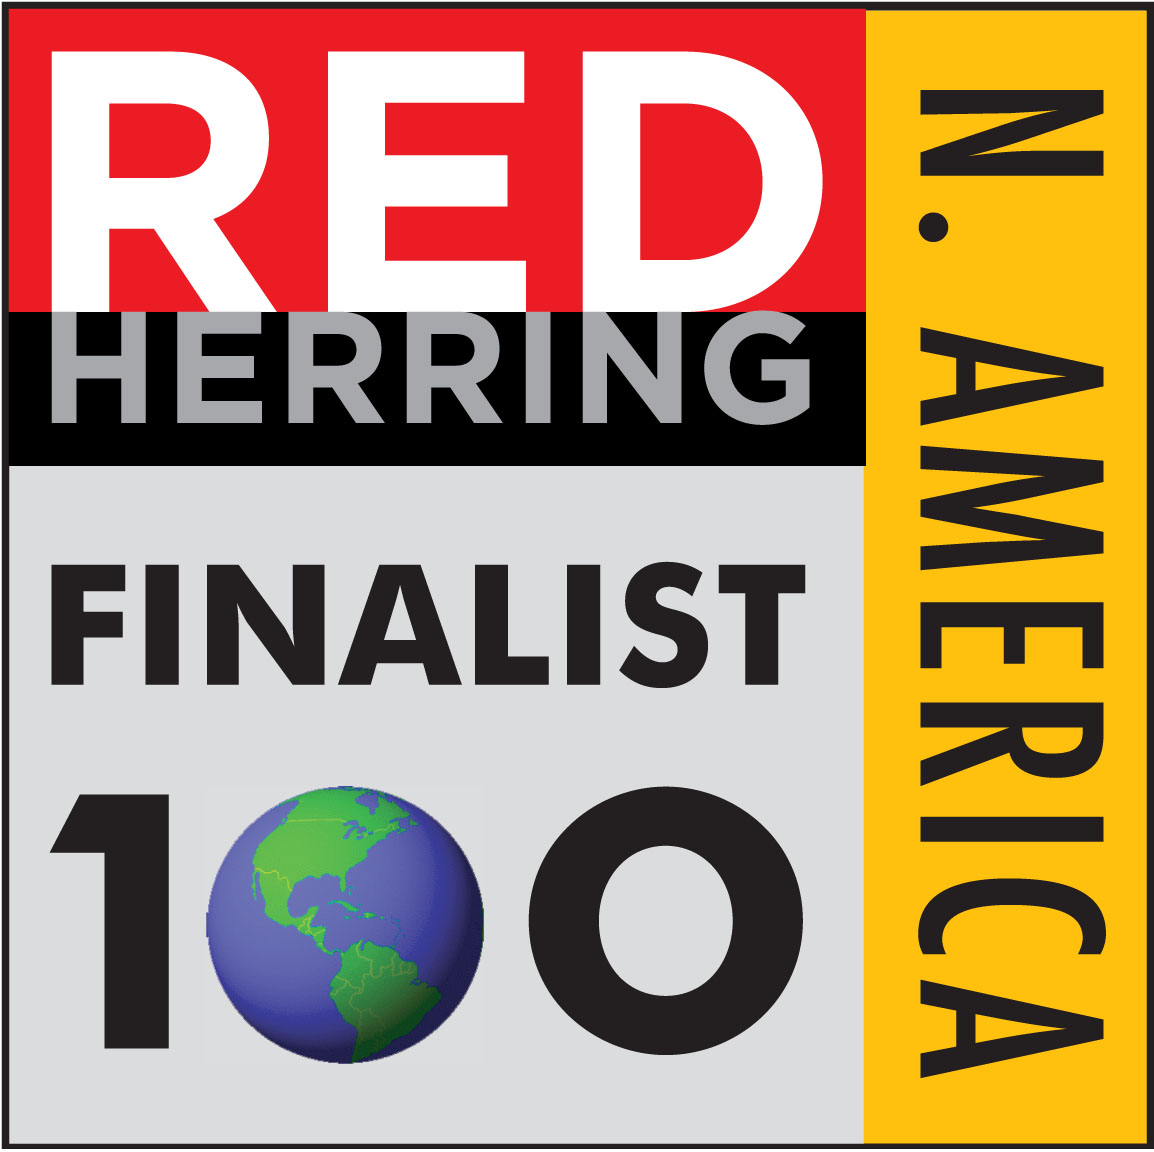 Red Herring finalist 100